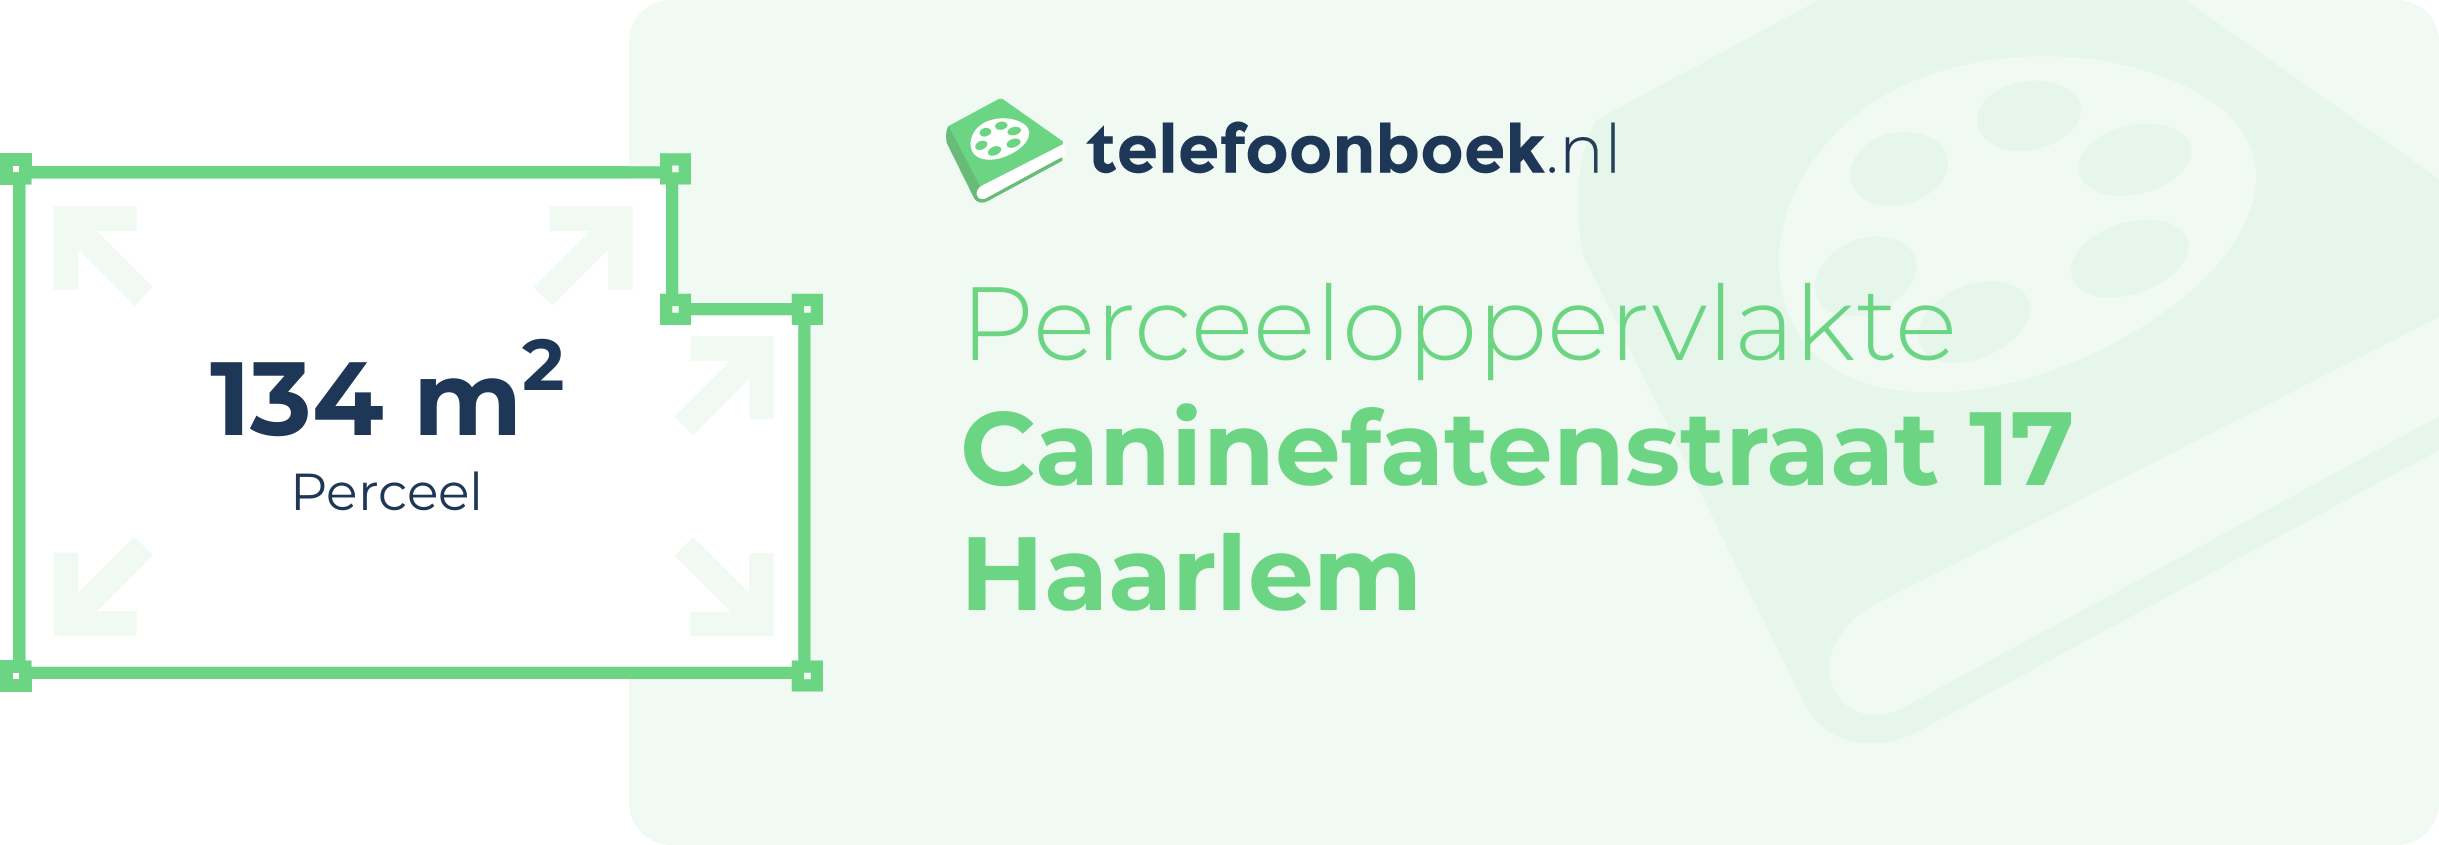 Perceeloppervlakte Caninefatenstraat 17 Haarlem